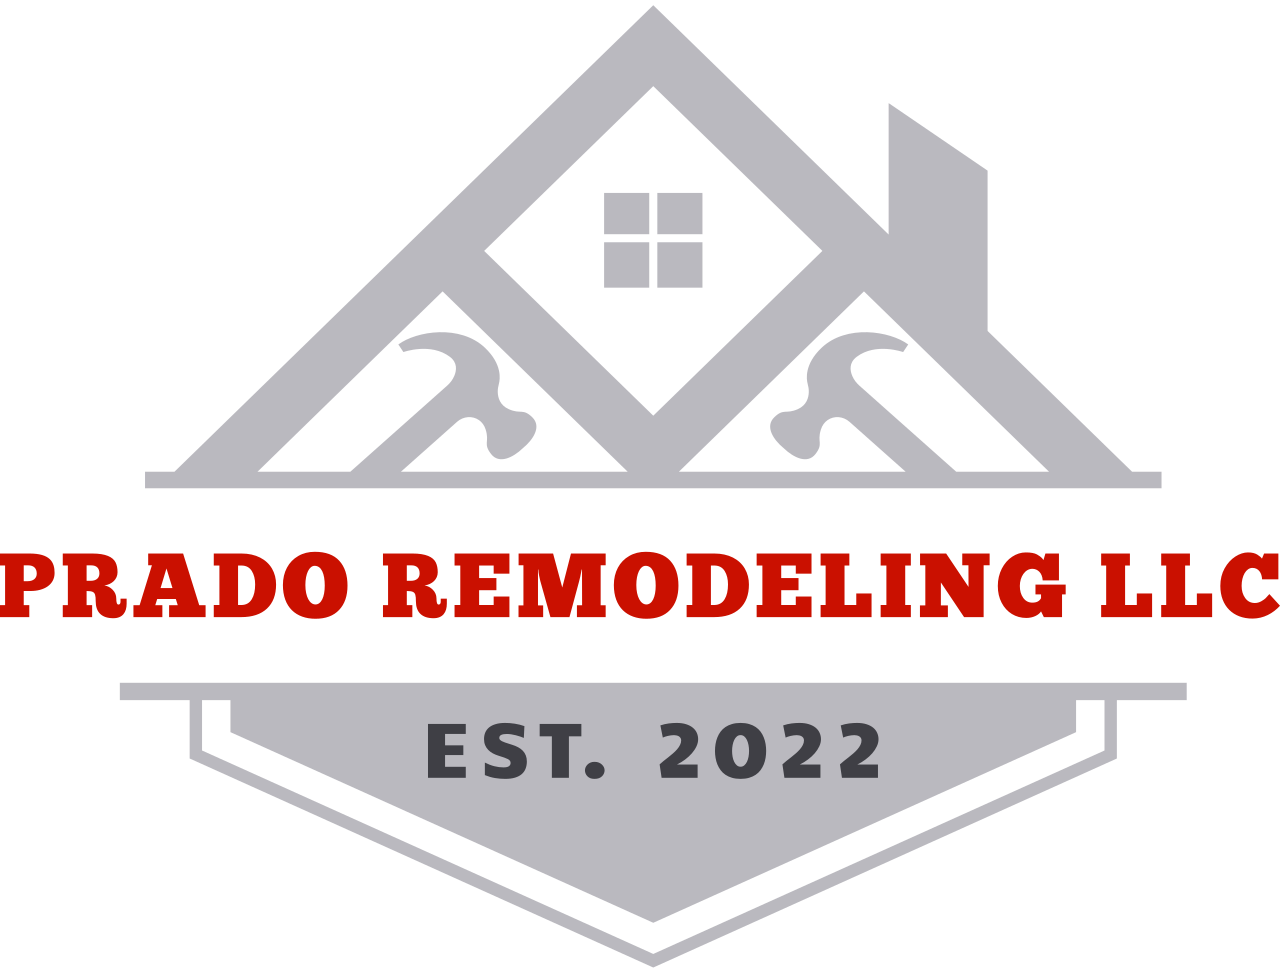 Prado remodeling llc 's web page